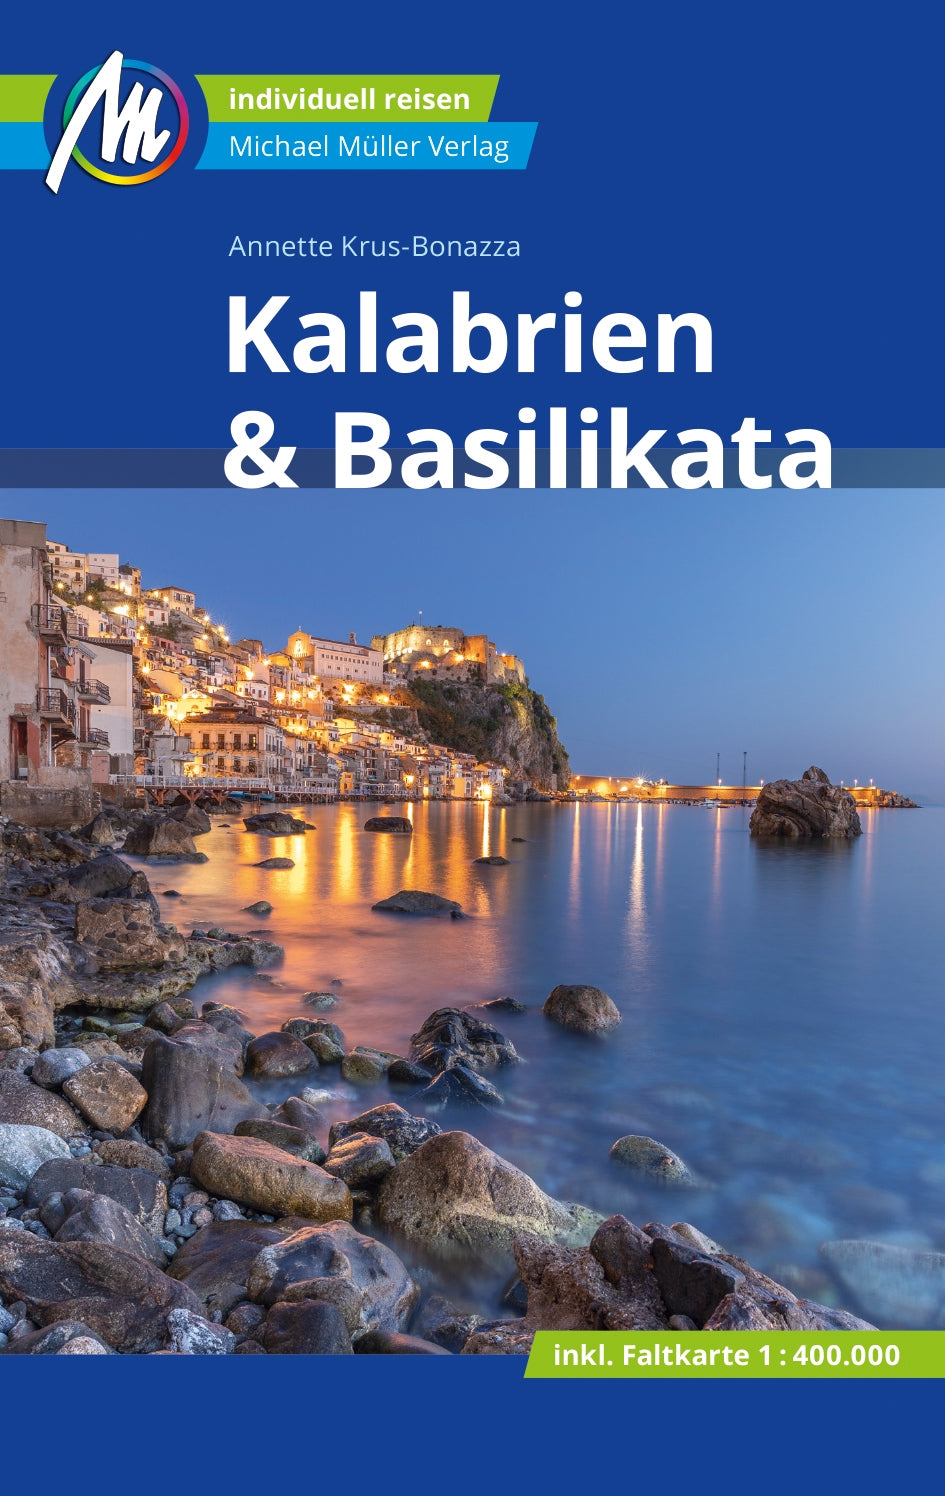 Travel guide Kalabrien &amp; Basilikata 8.A 2023